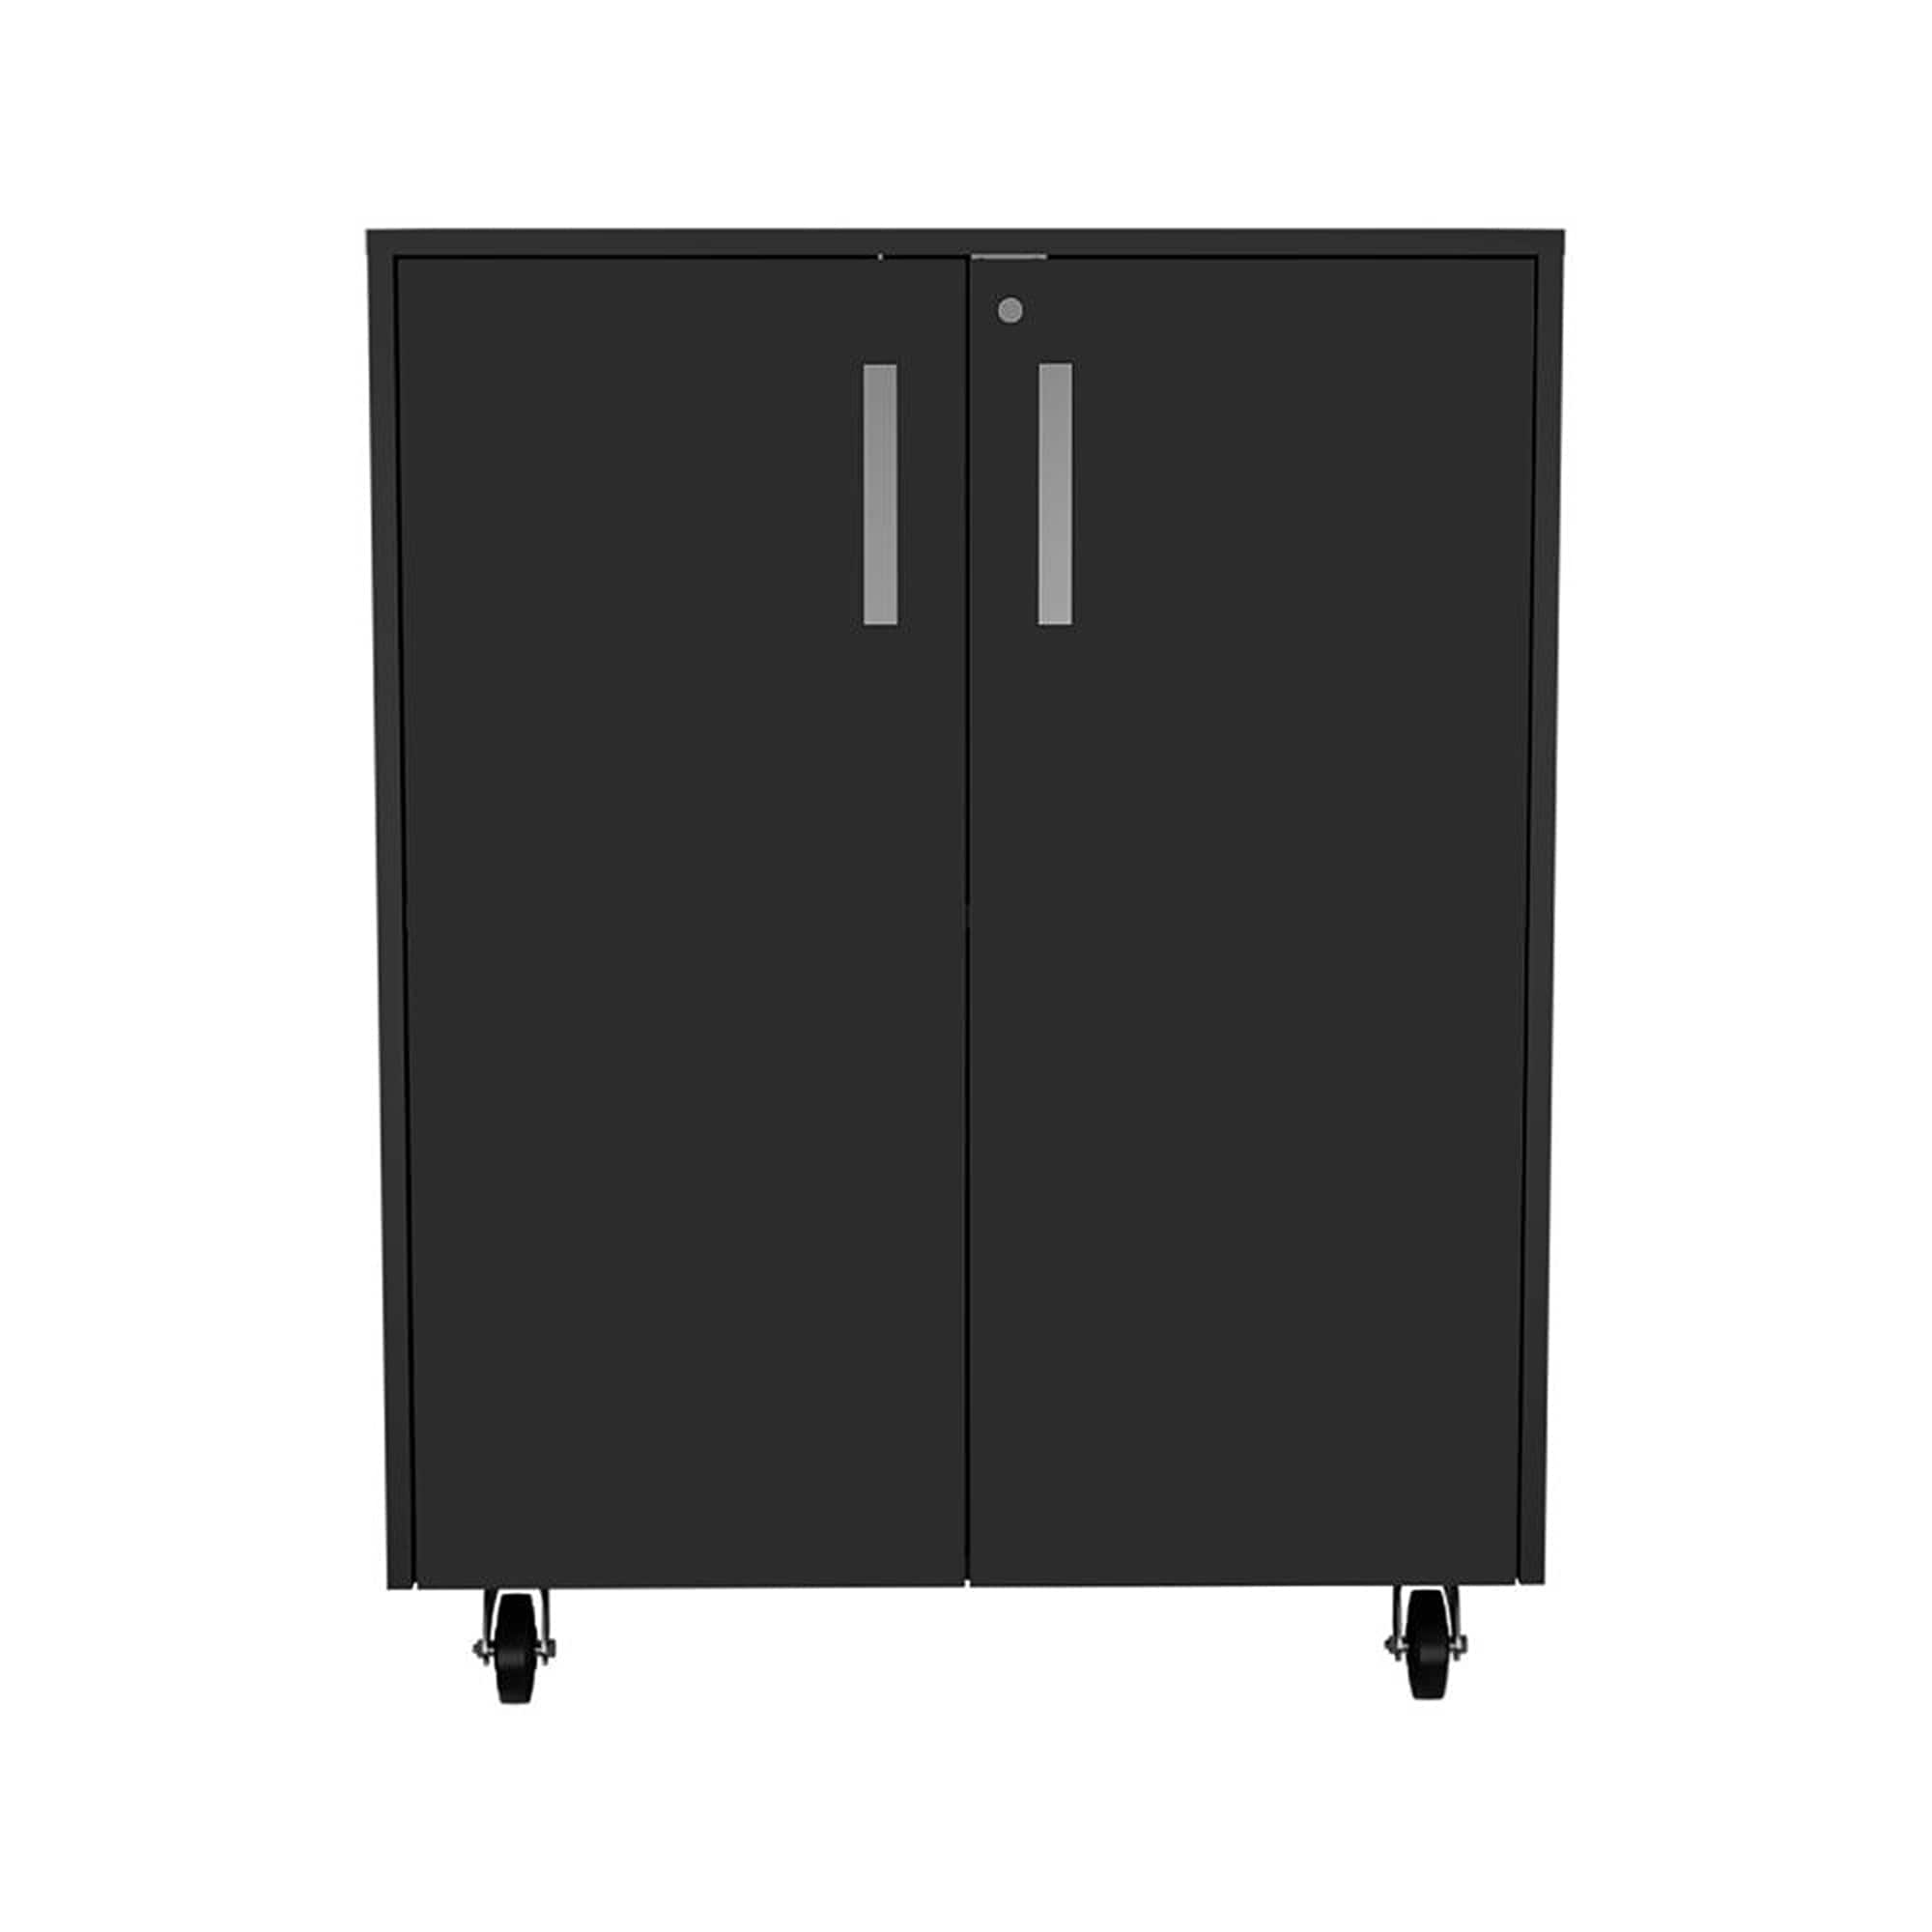 Kitchen Storage Cabinet, Casters, Double Door, Two Interior Shelves -Black